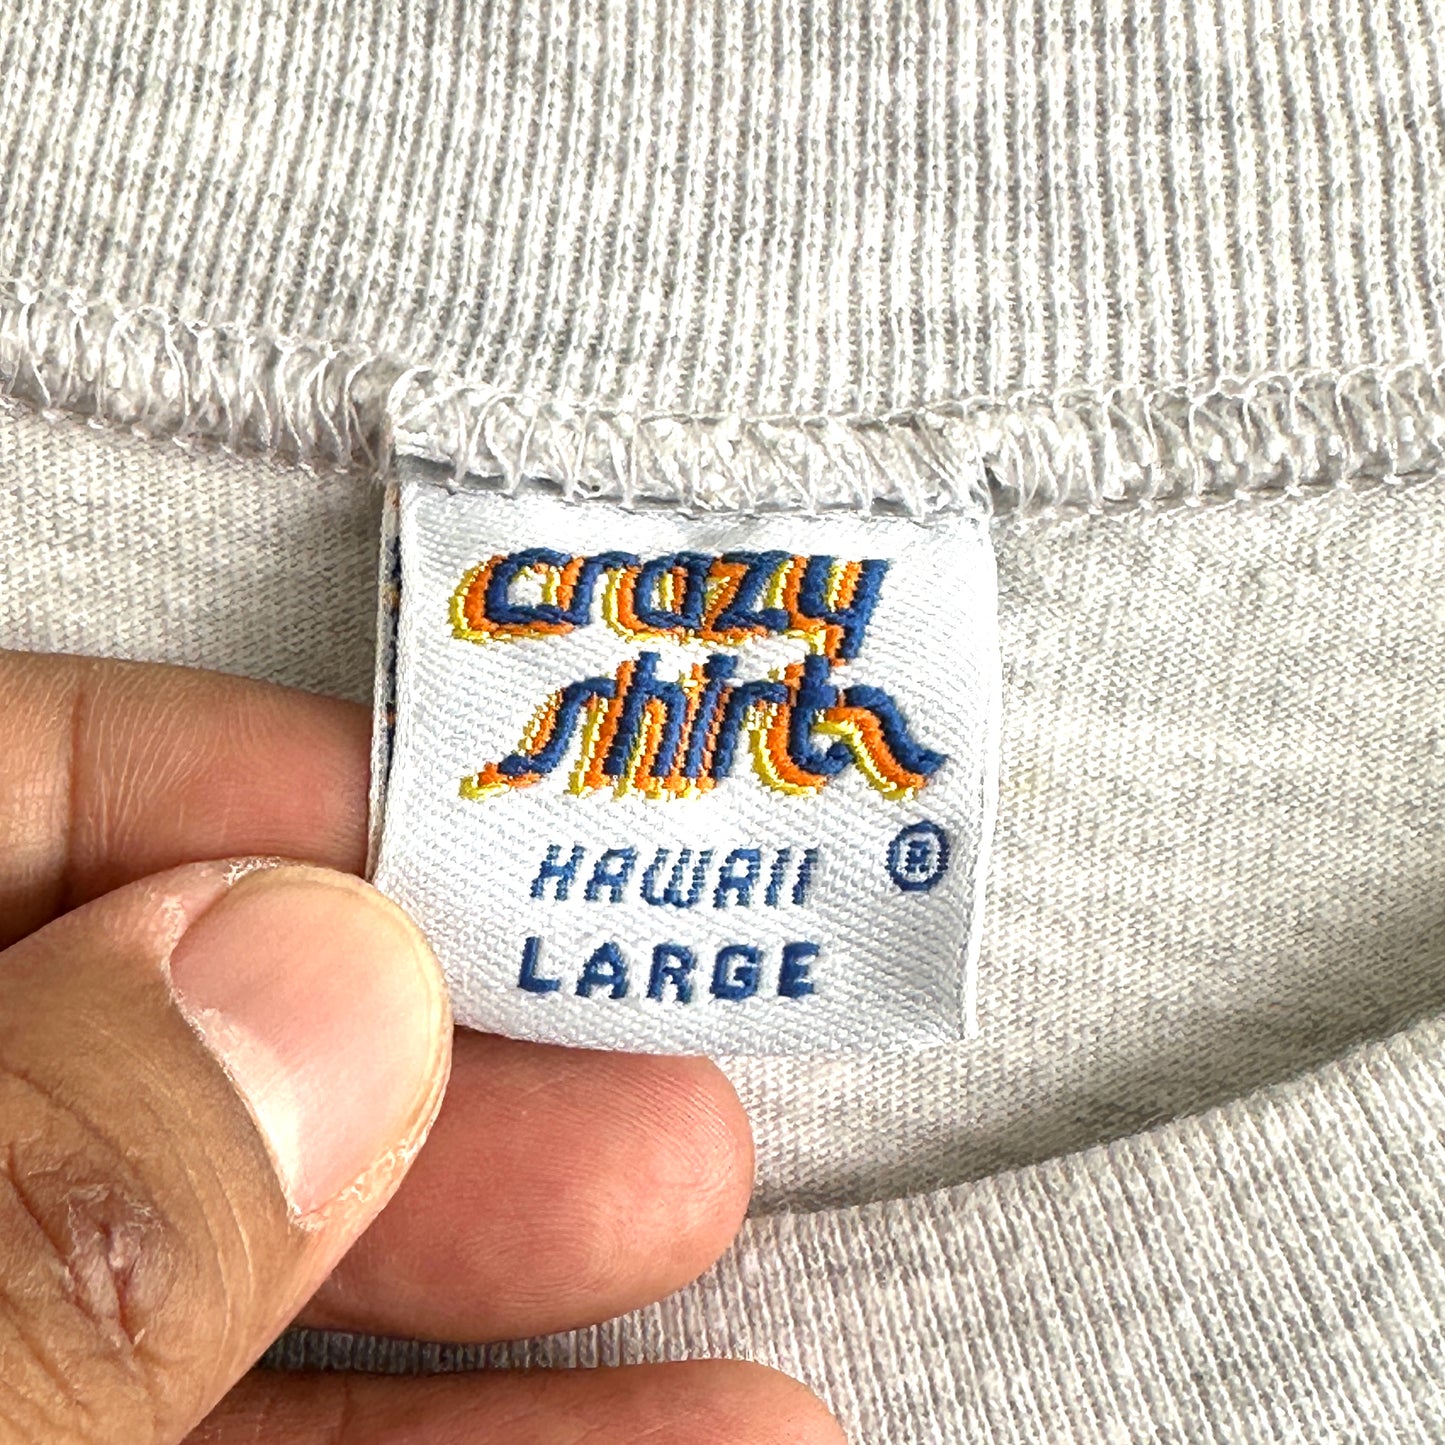 Vintage Crazy Shirt Hawaii "Cat" 90's Made in USA T-shirt